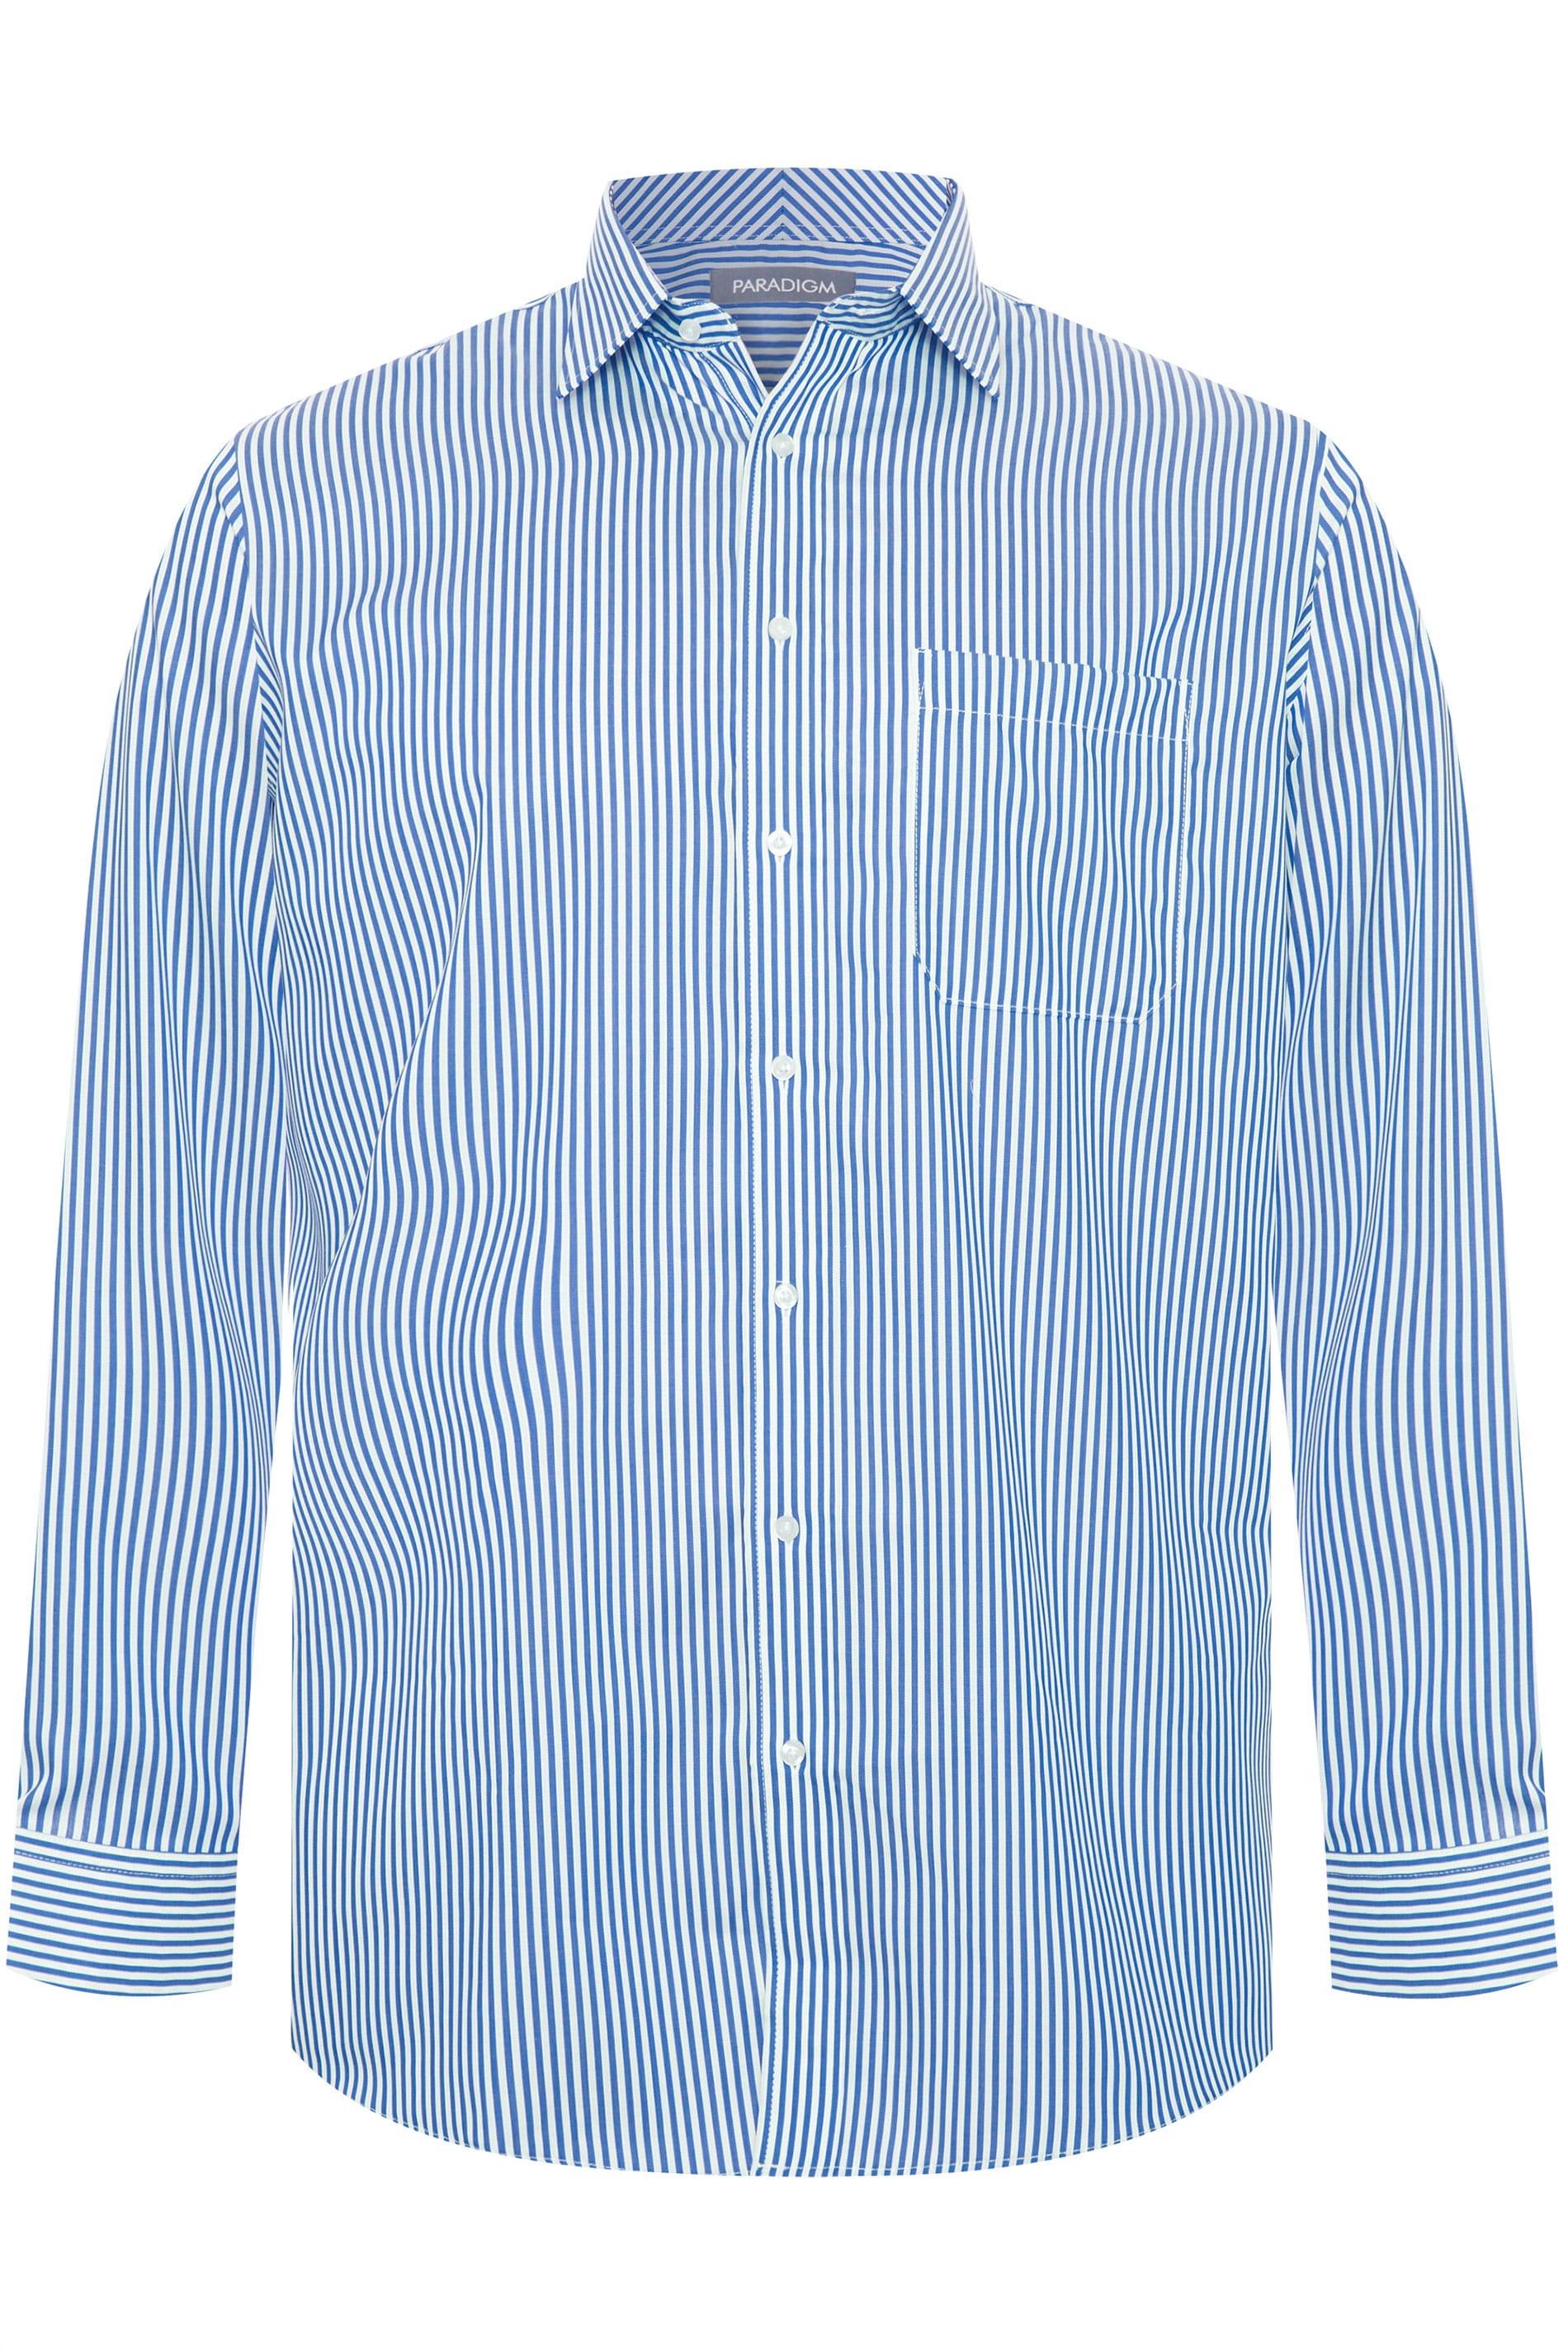 DOUBLE TWO Blue Stripe Luxury Long Sleeve Shirt | BadRhino